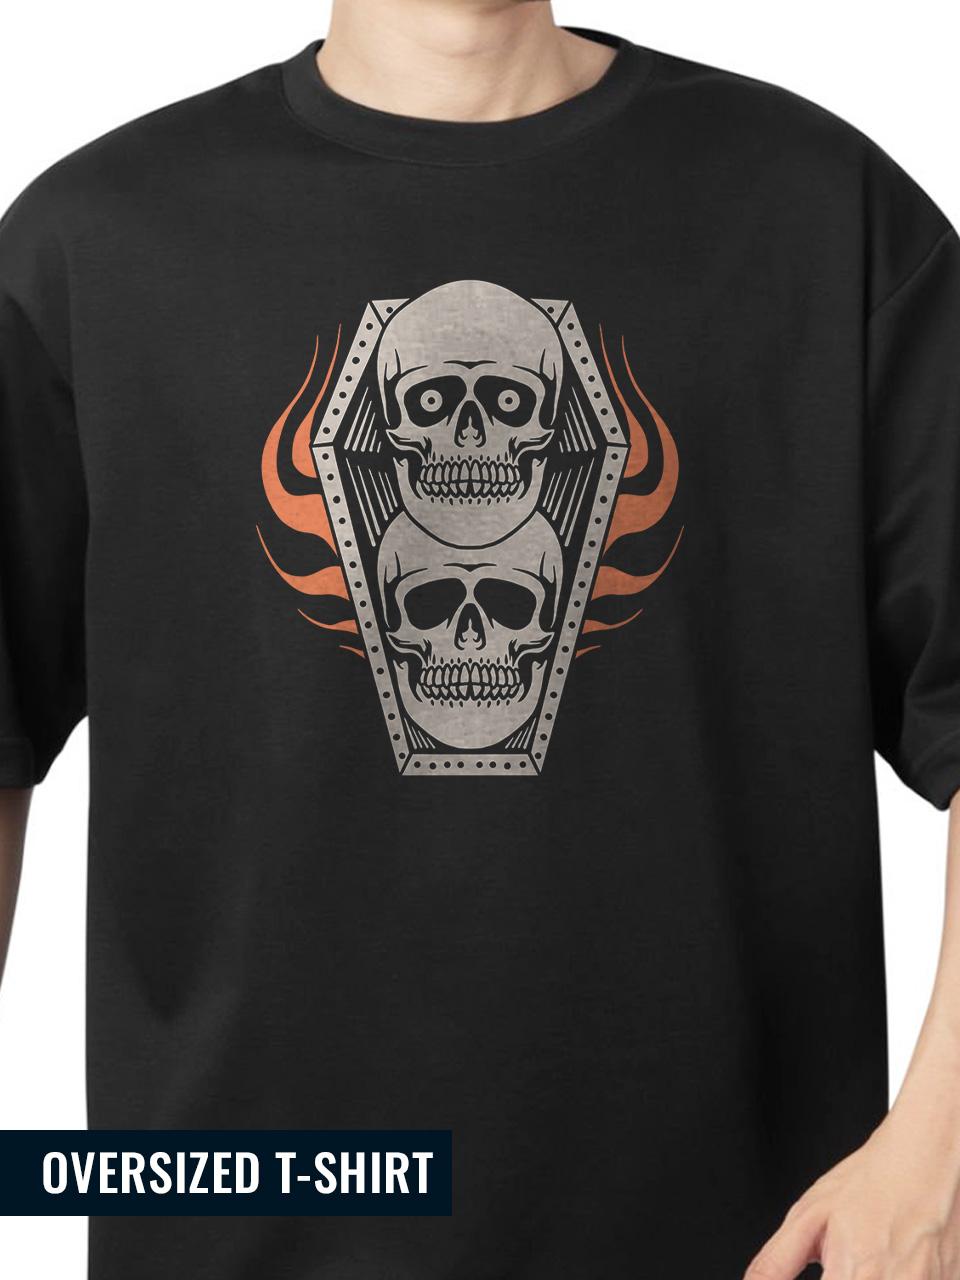  Shadowed Twin Skulls Oversized T-Shirt